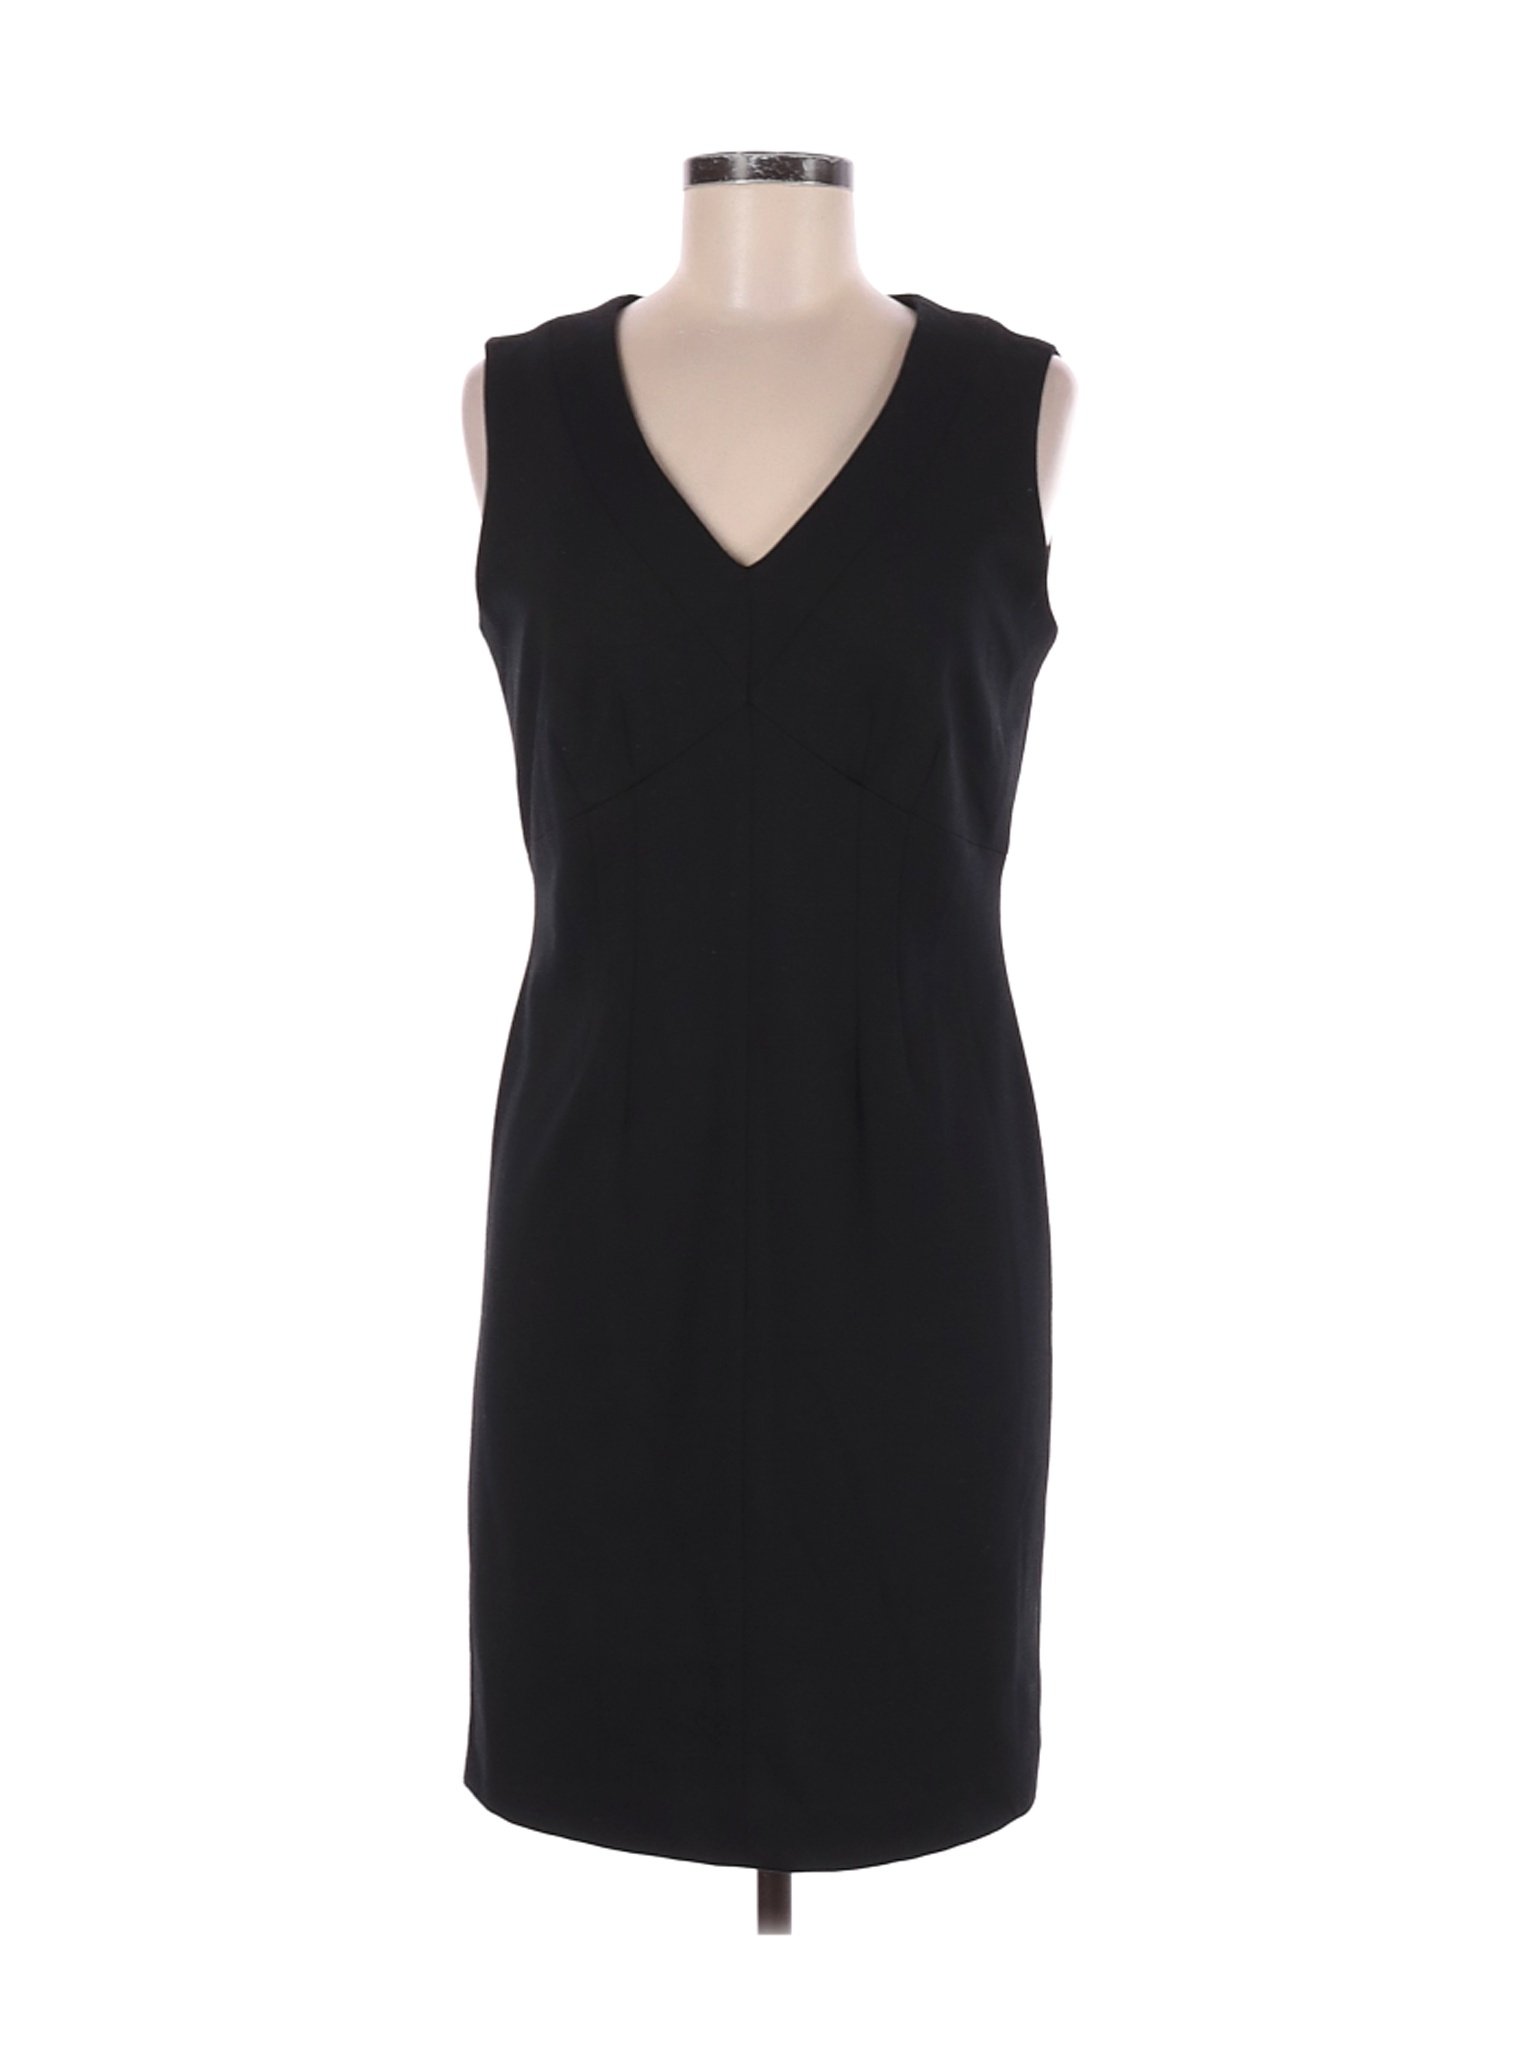 Adrienne Vittadini Women Black Casual Dress 6 | eBay